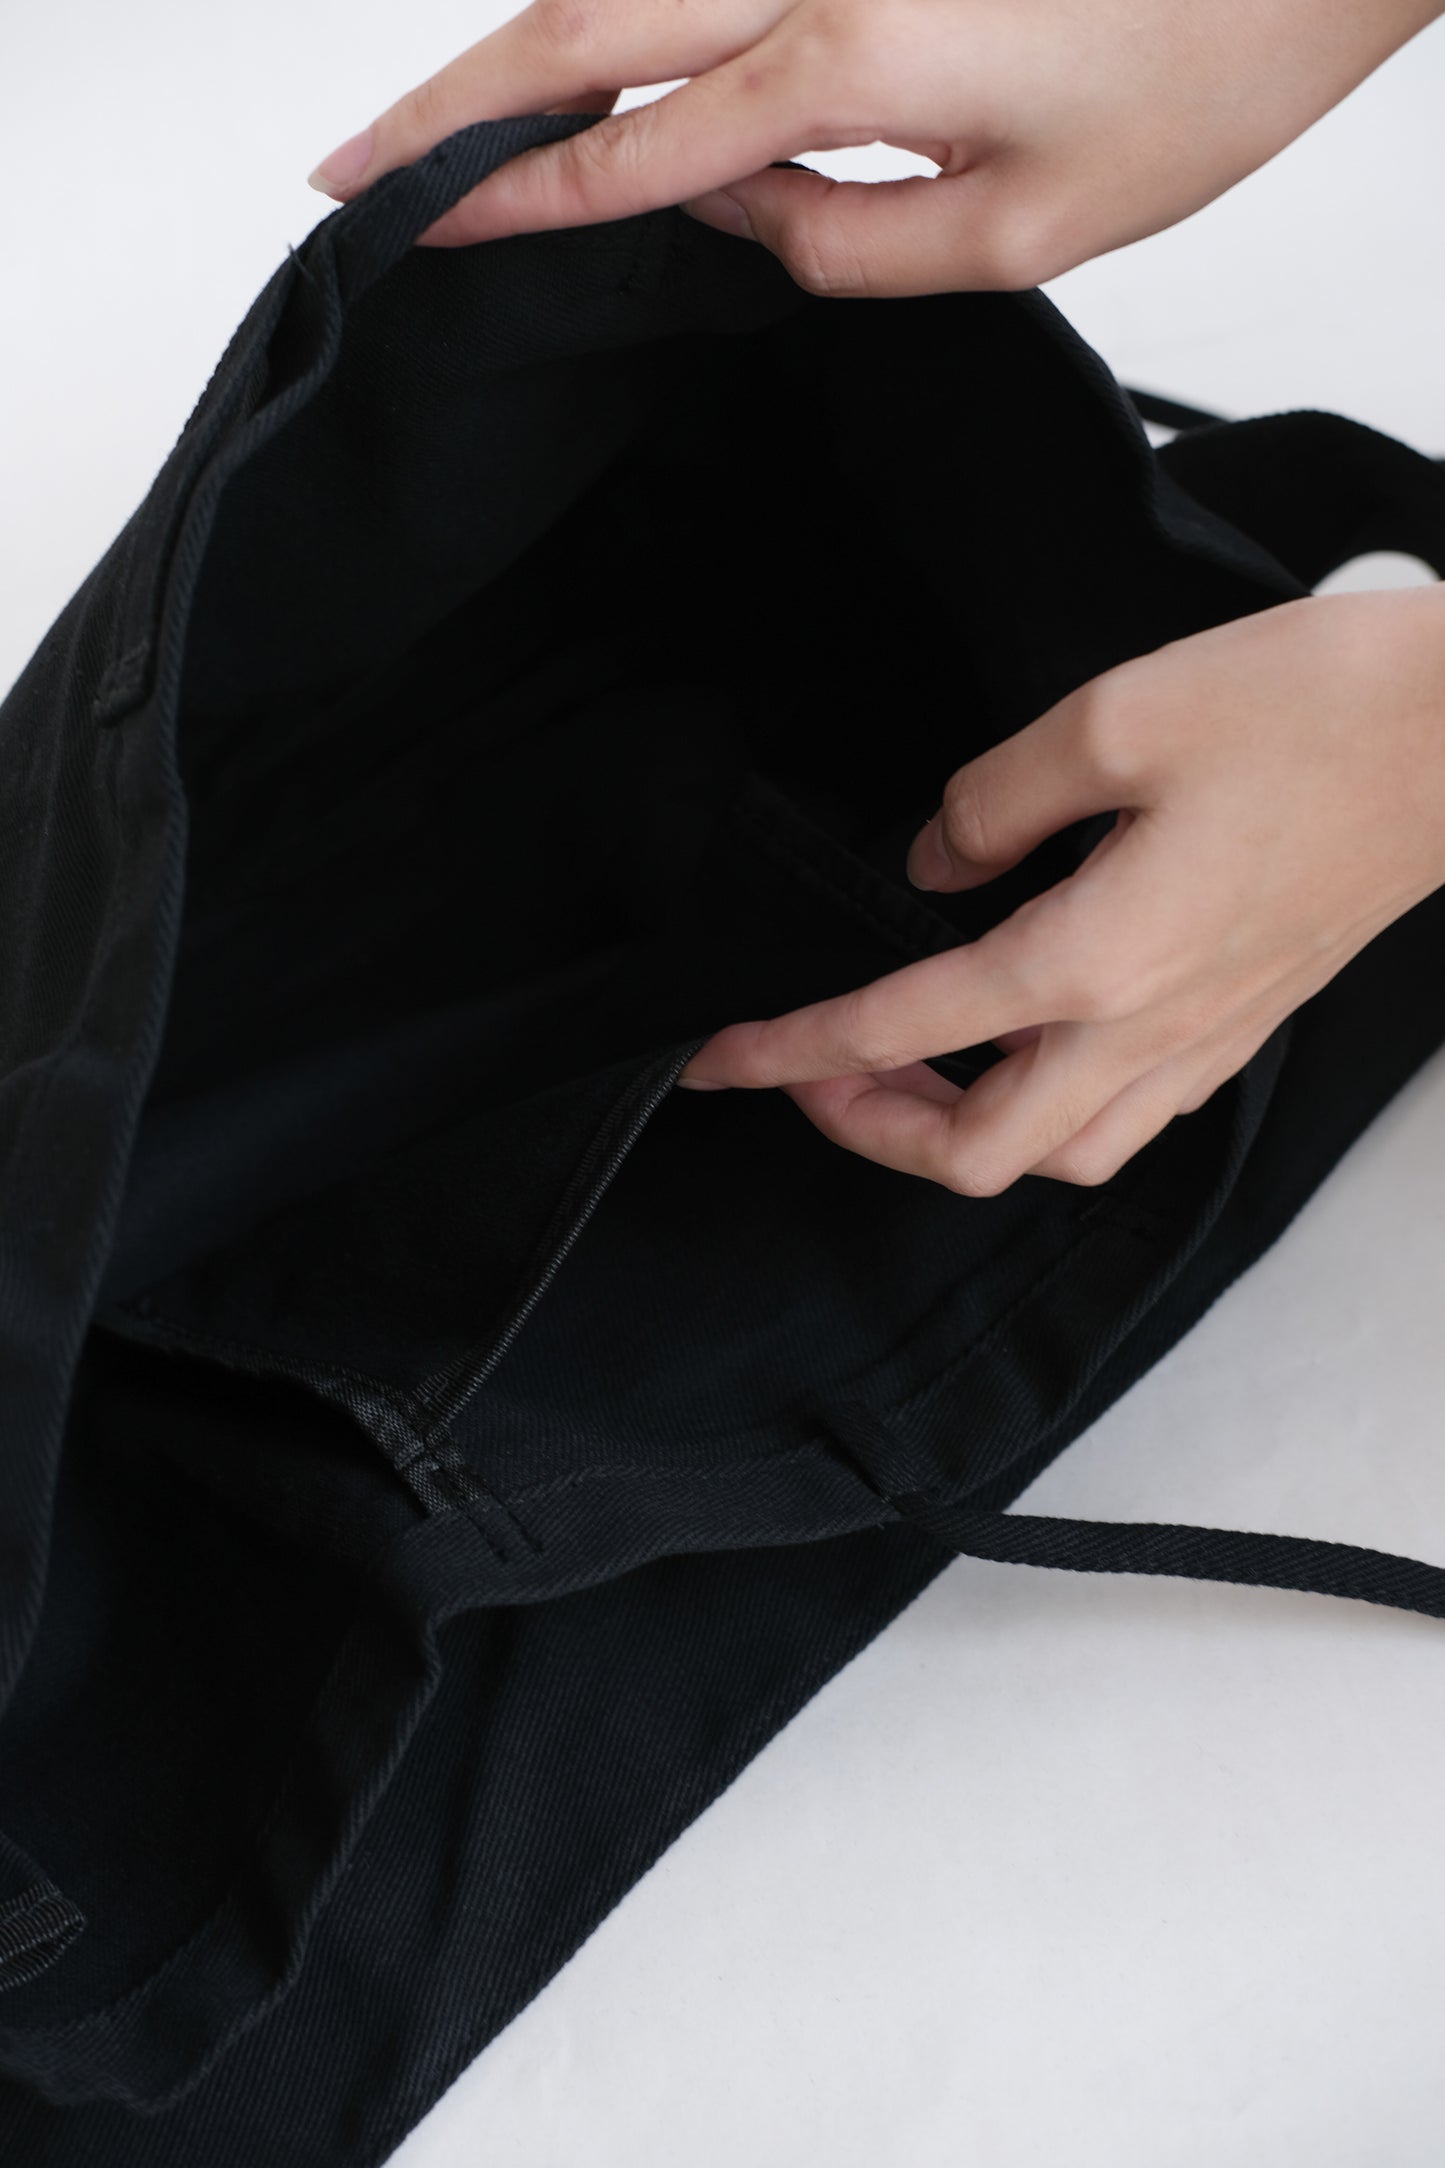 Lace canvas bag in classic black color